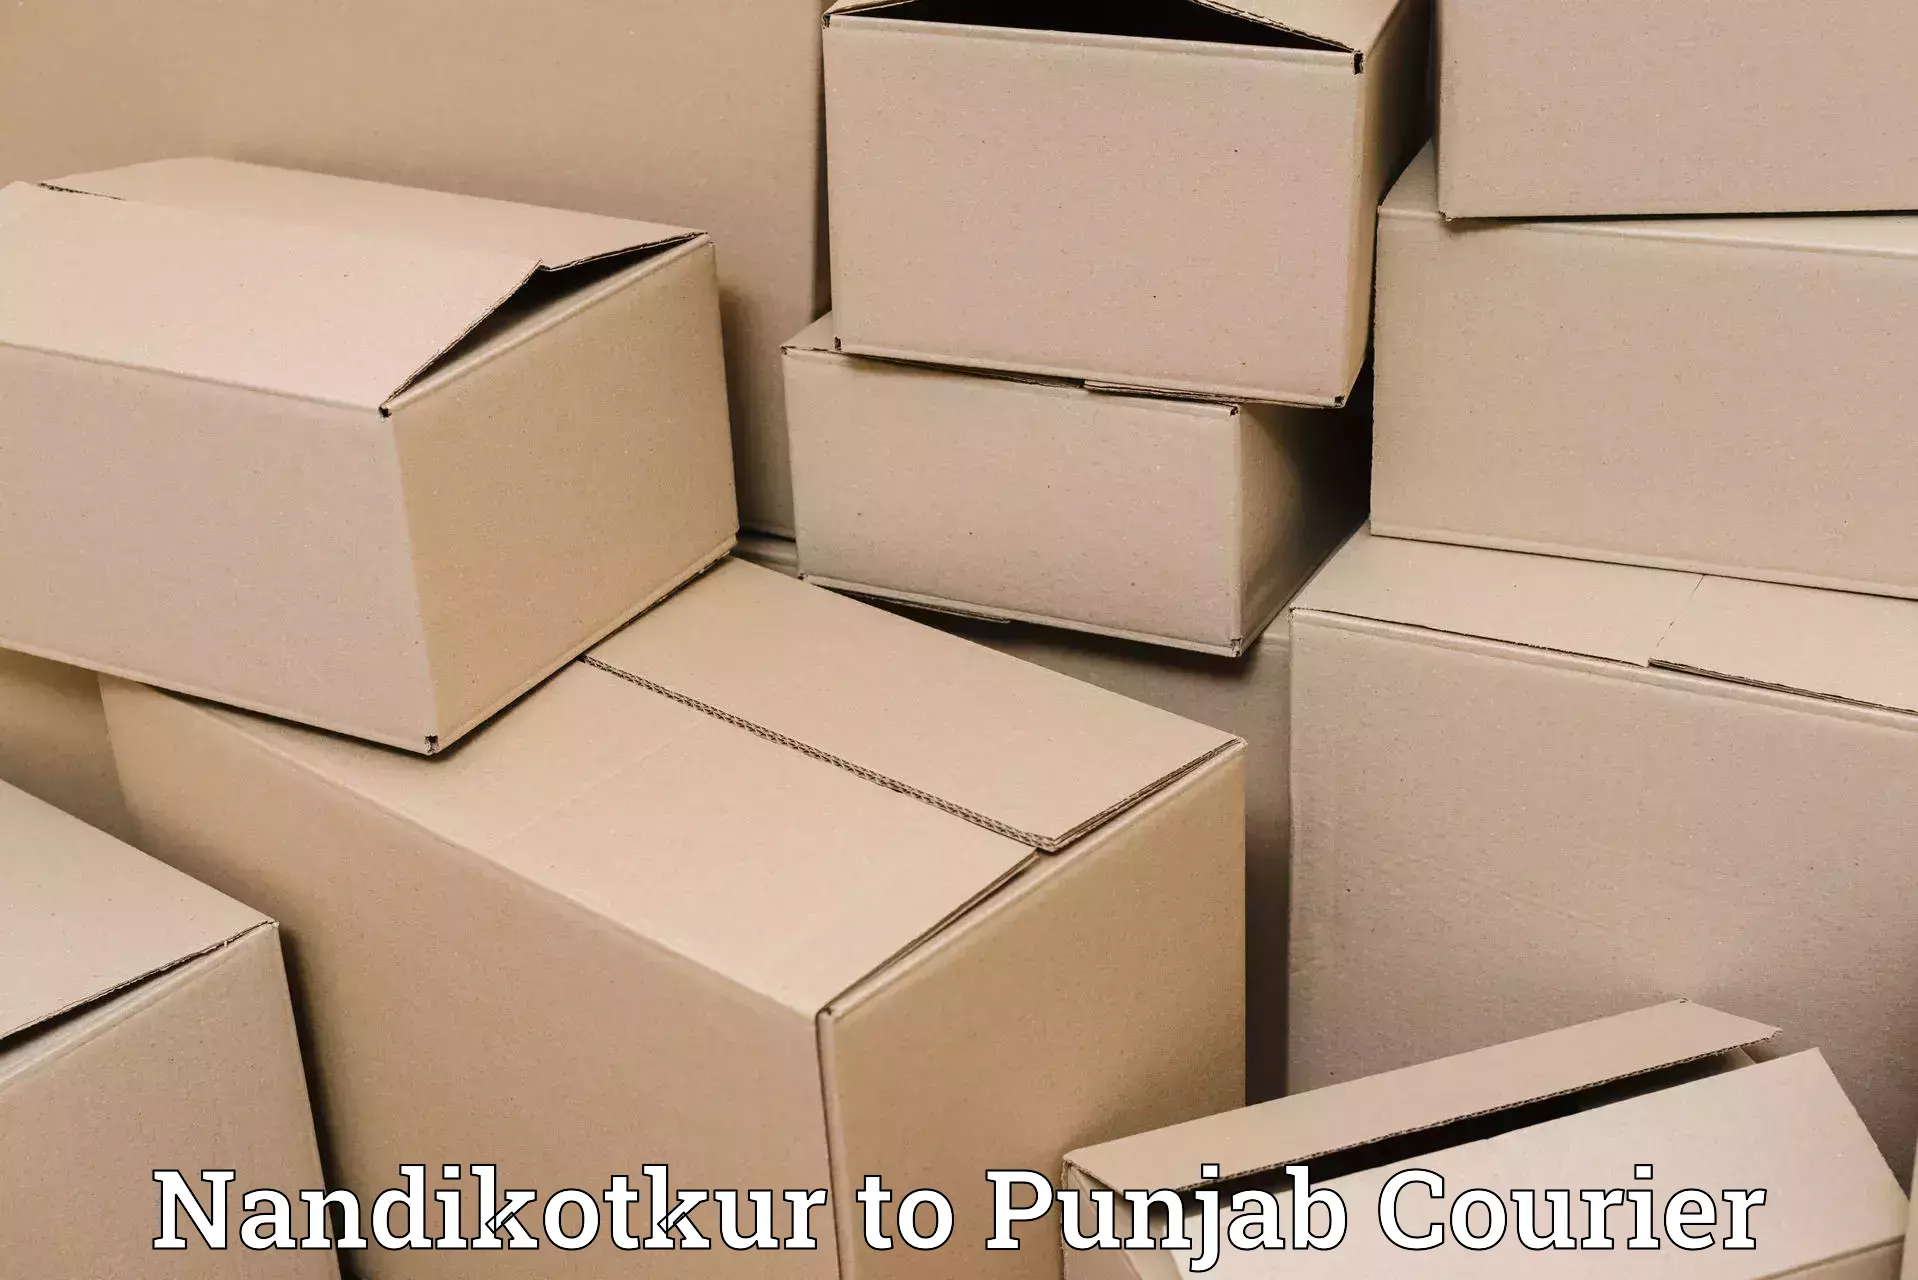 Logistics service provider in Nandikotkur to Mohali